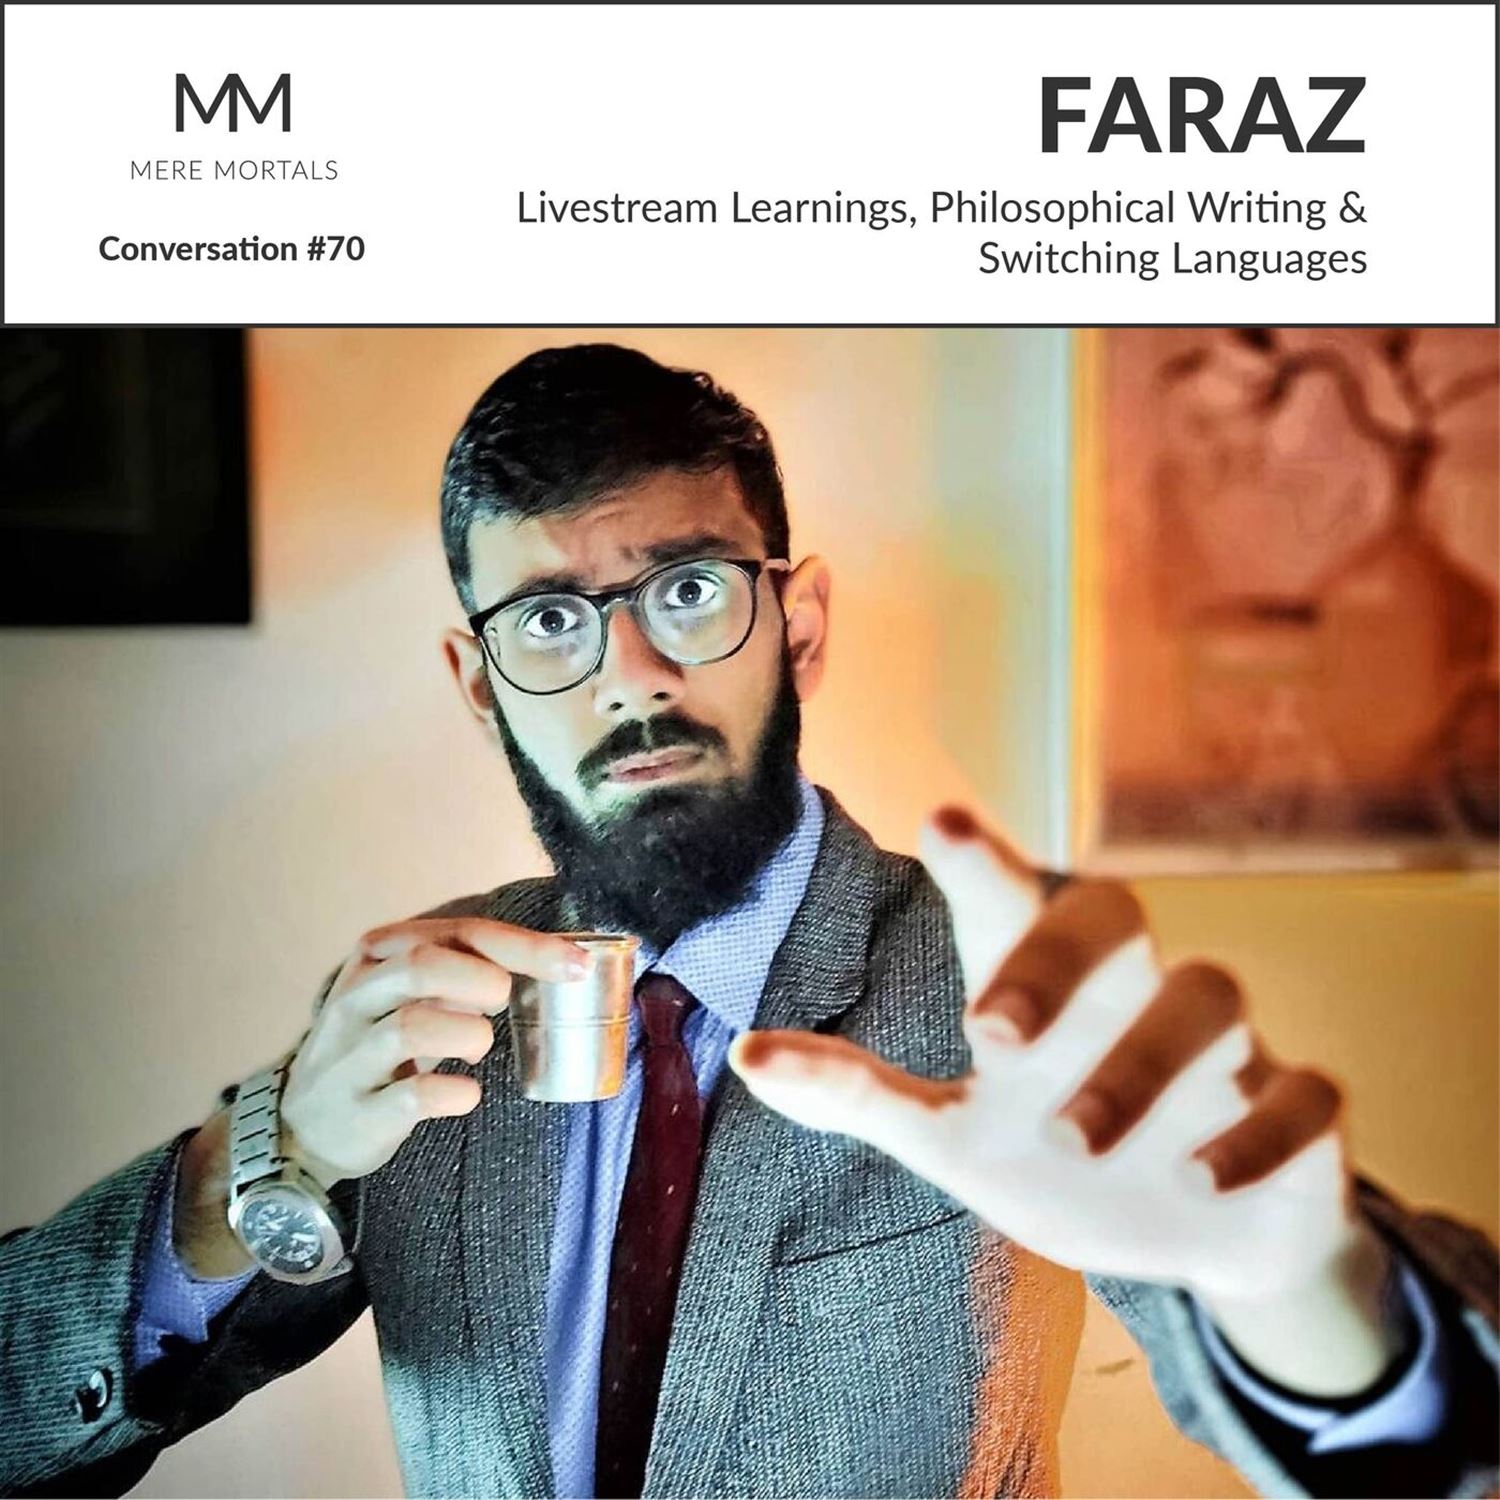 Who is Faraz?